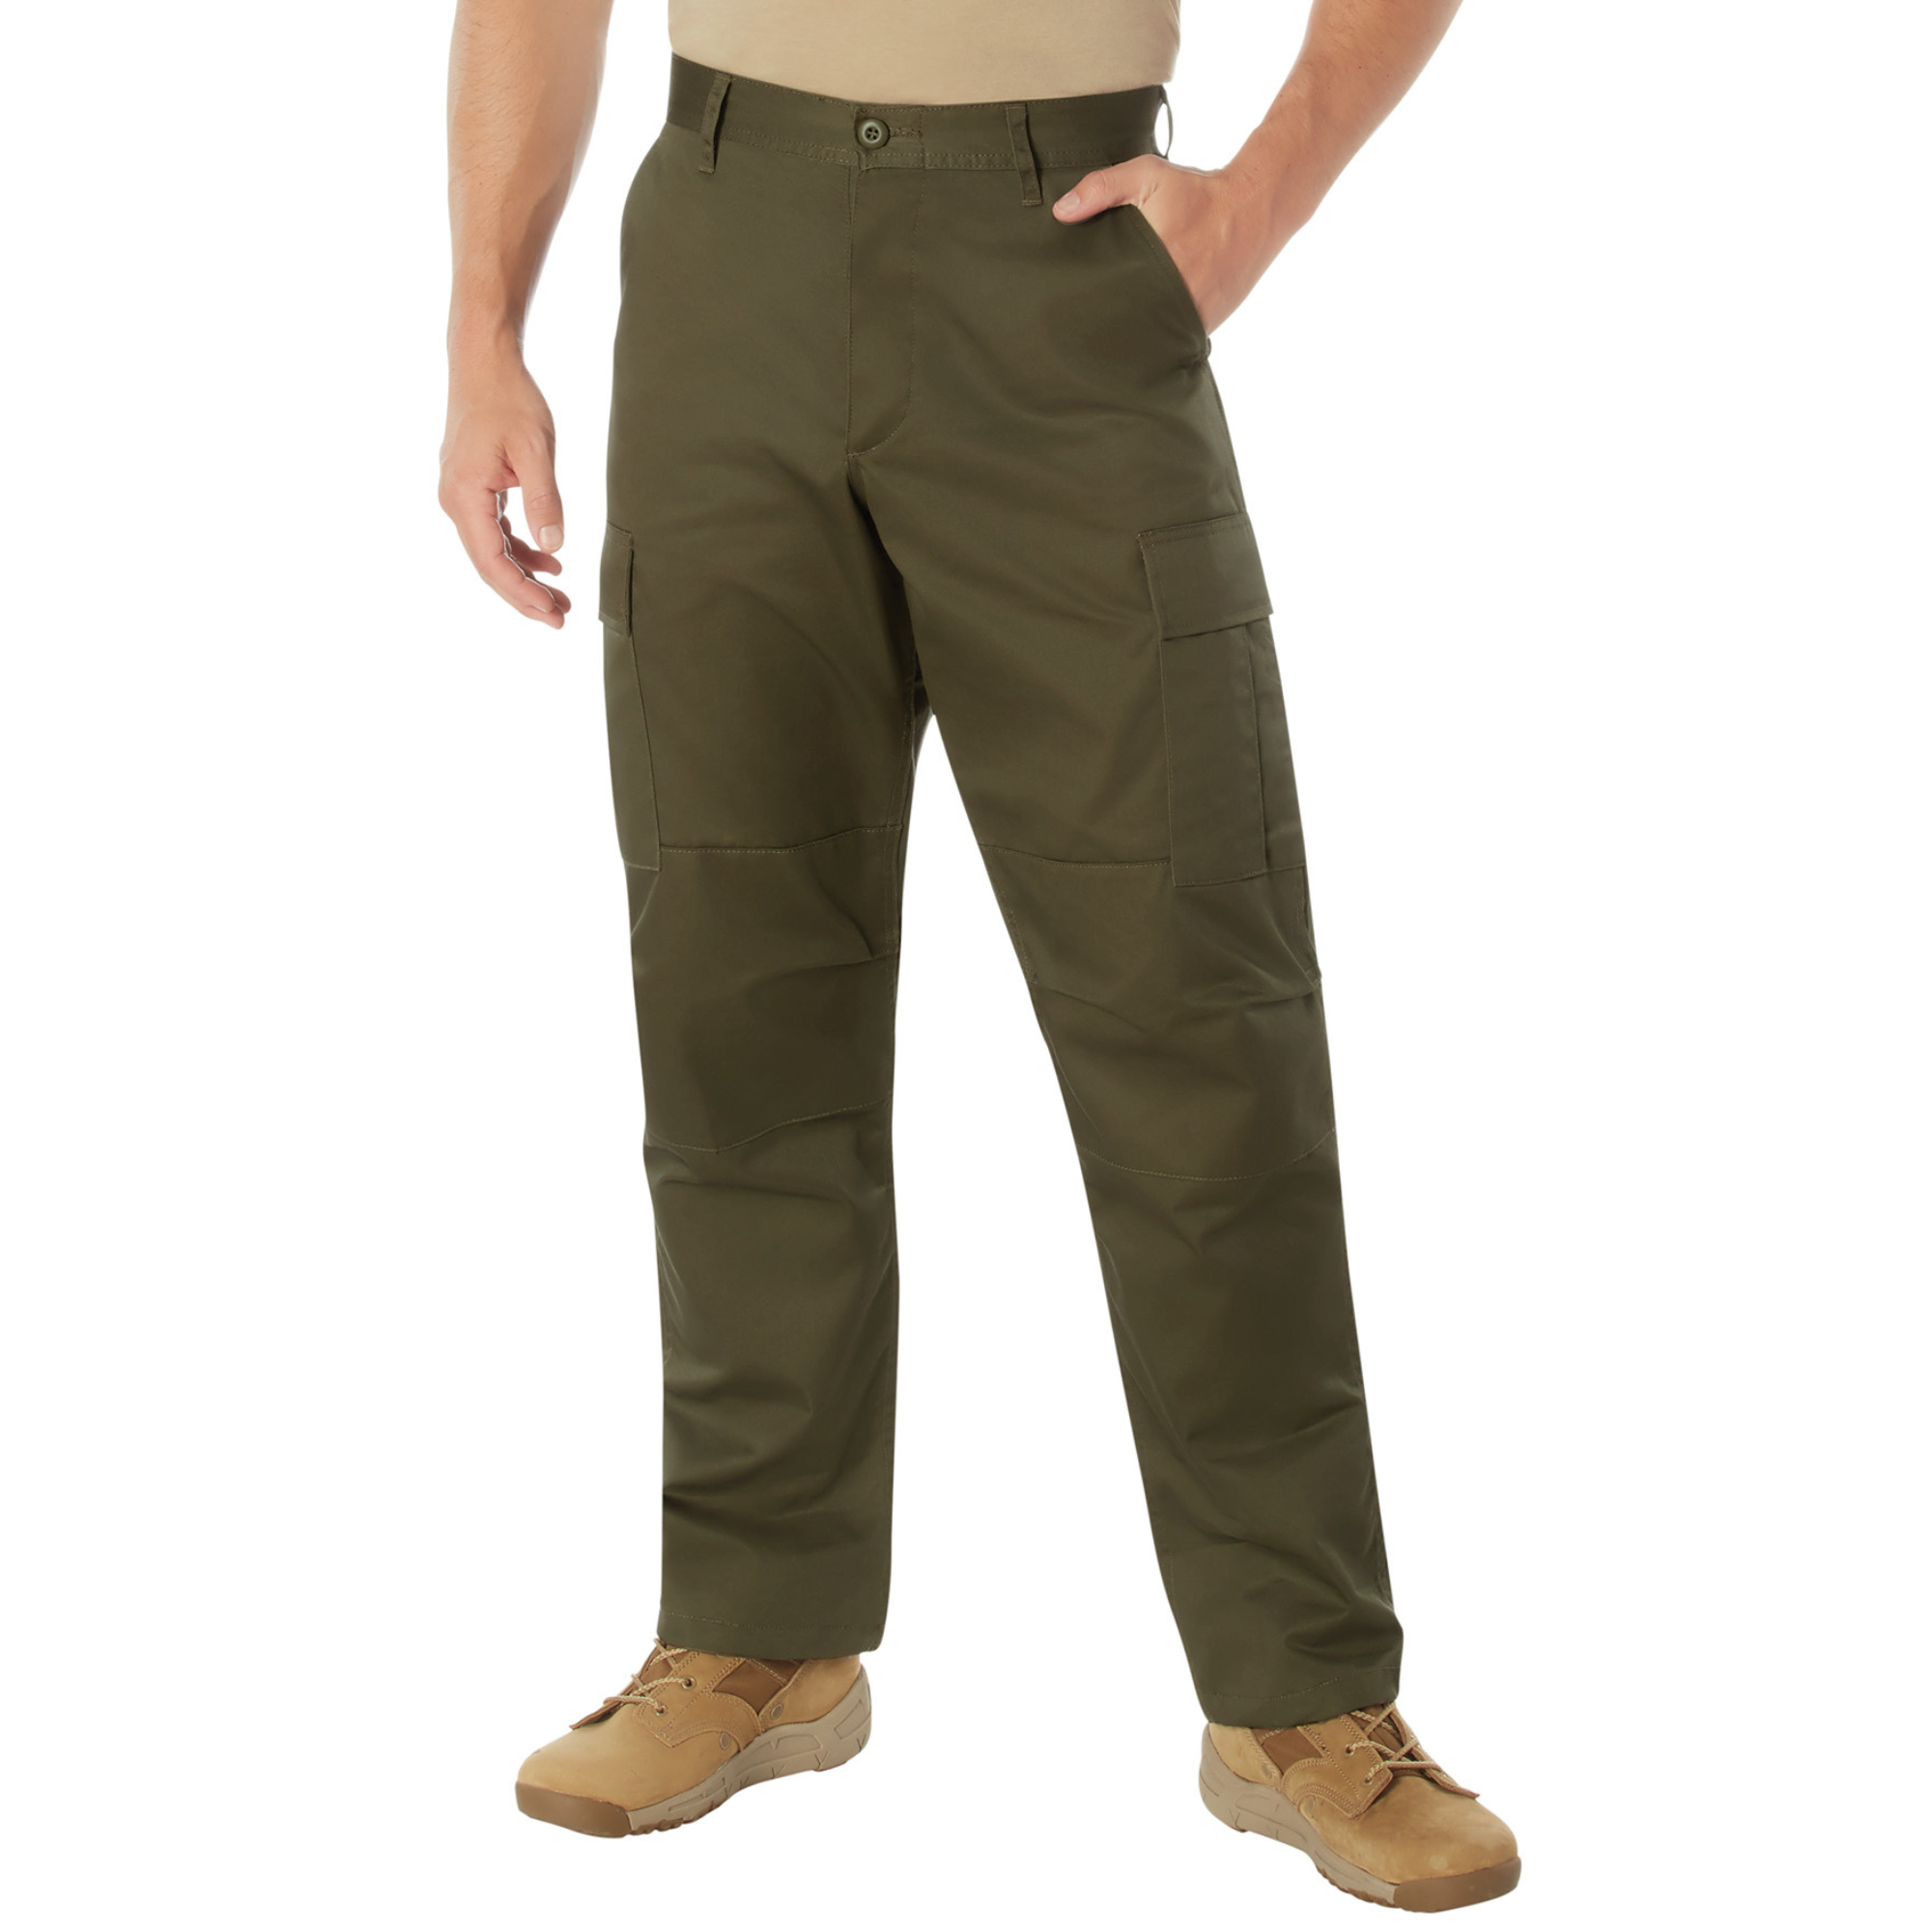 Ranger Green Tactical BDU Cargo Pants